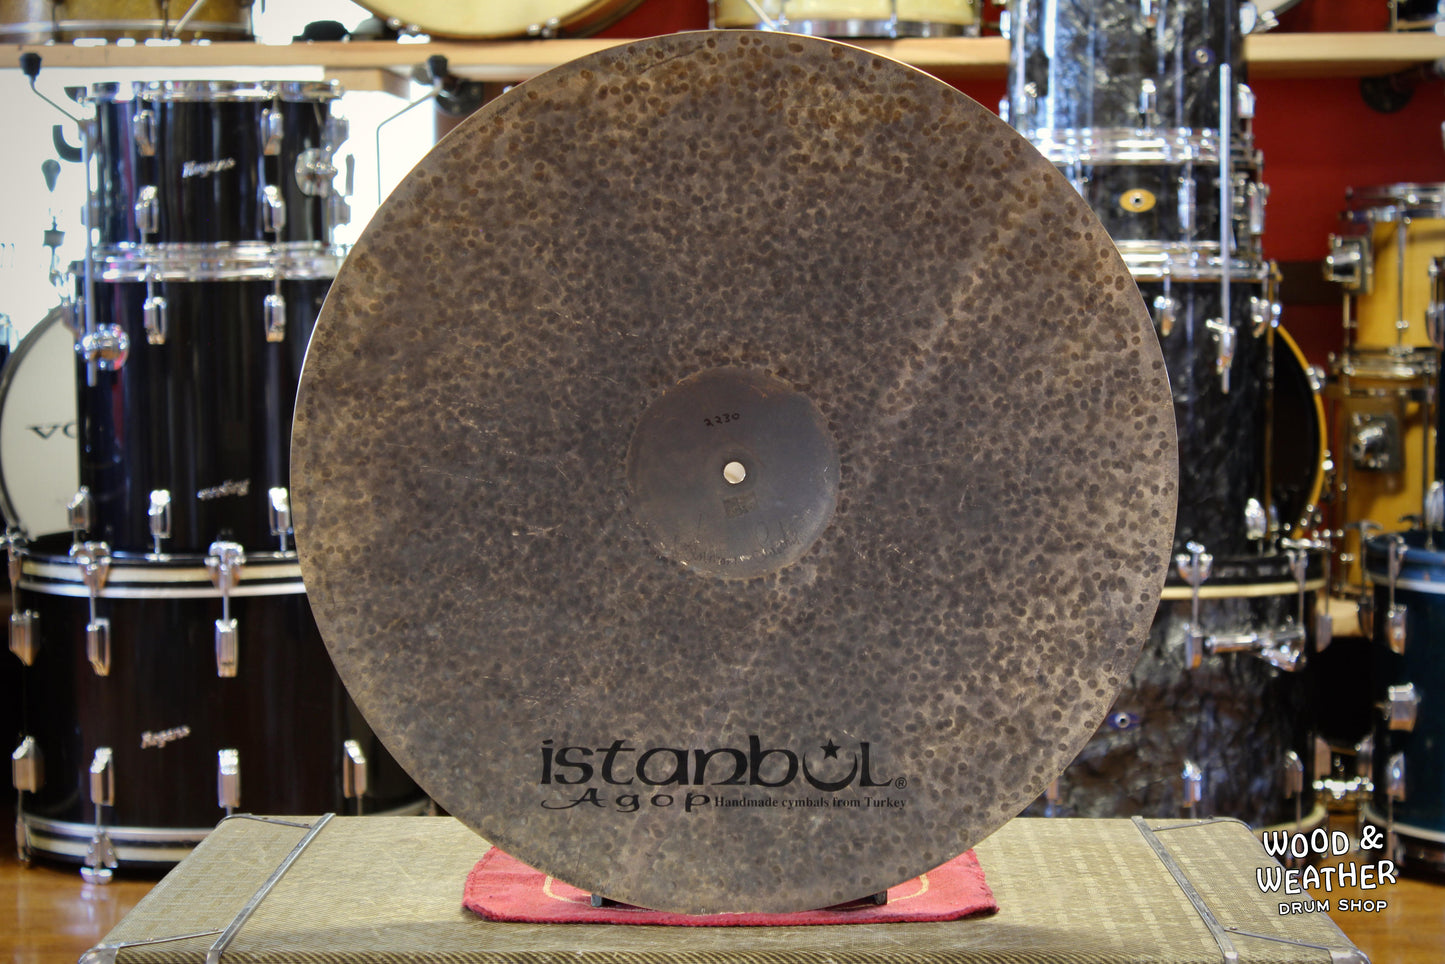 Istanbul Agop 22" Turk Jazz Ride Cymbal 2230g